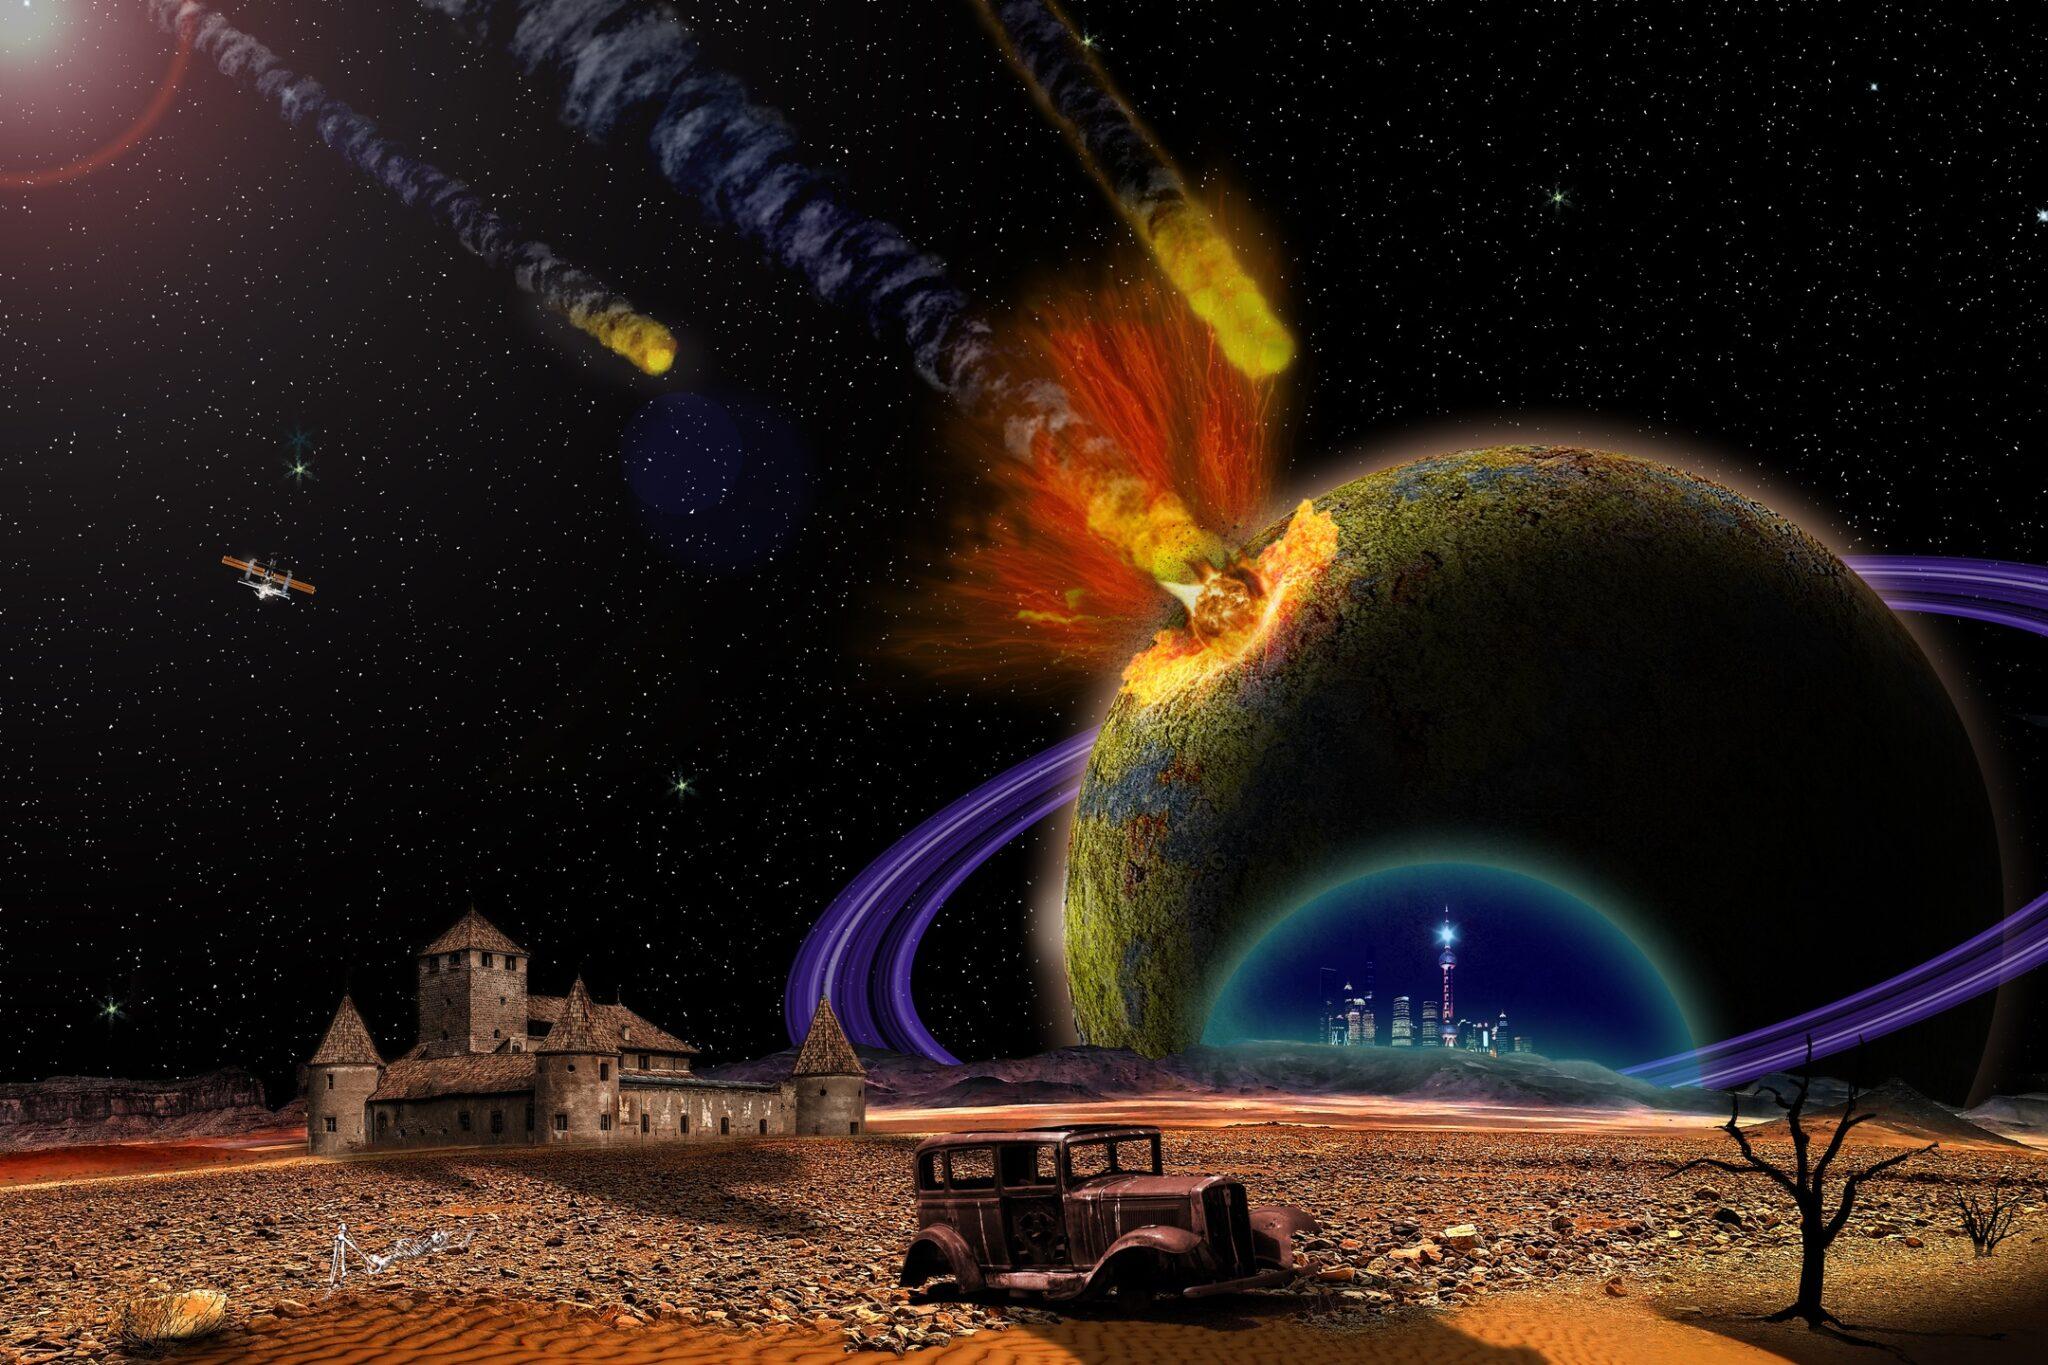 Meteor illustration